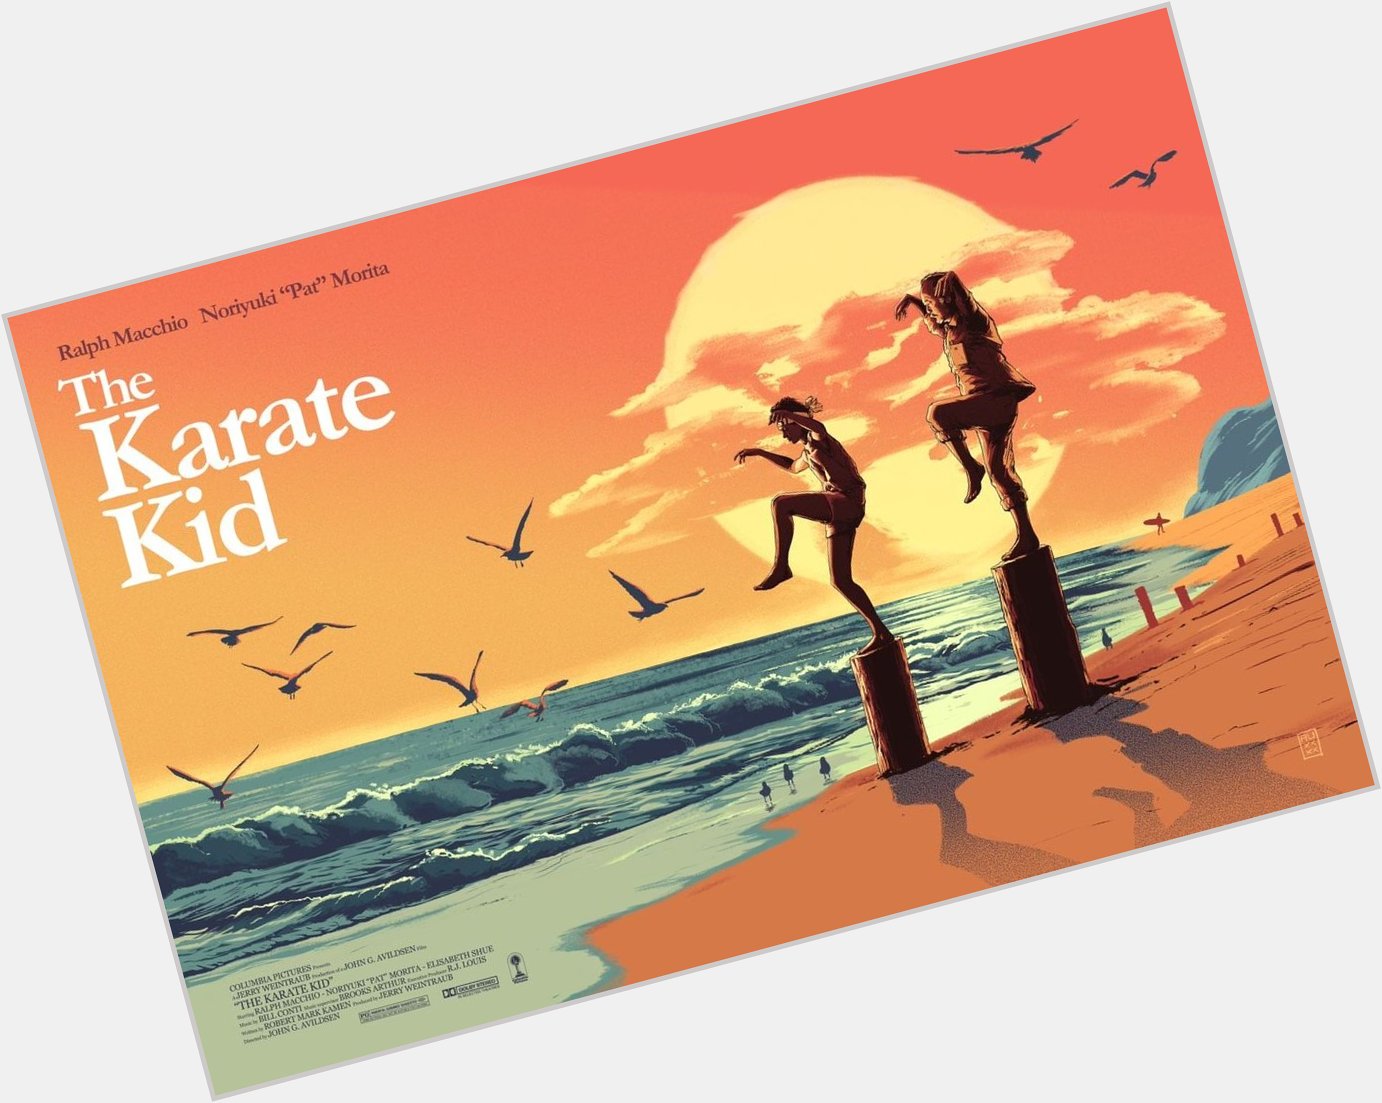 The Karate Kid  (1984)
Happy Birthday, Martin Kove! 